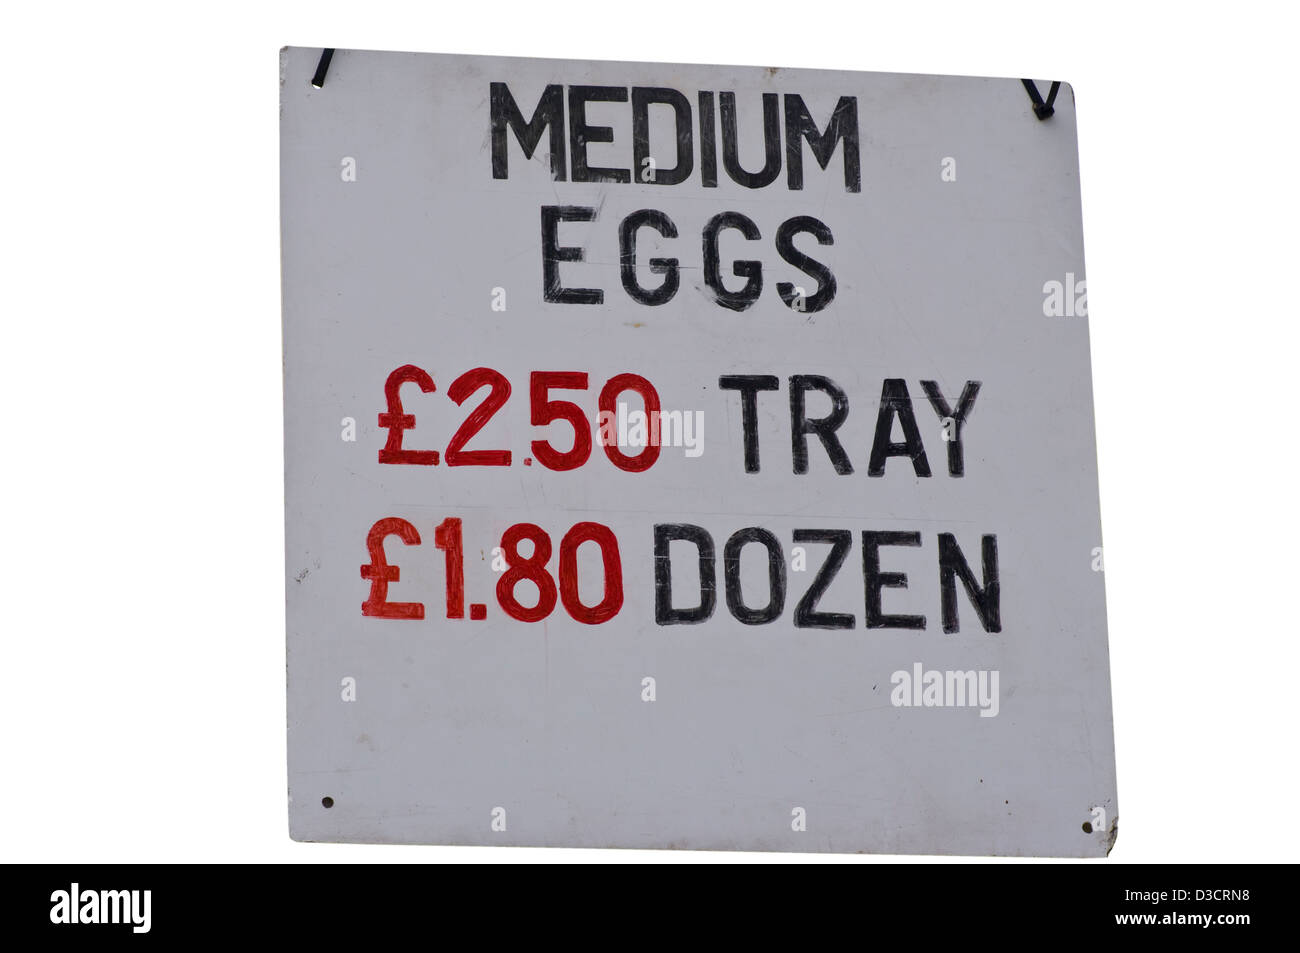 Medium Eggs For Sale Roadside Sign Stock Photo